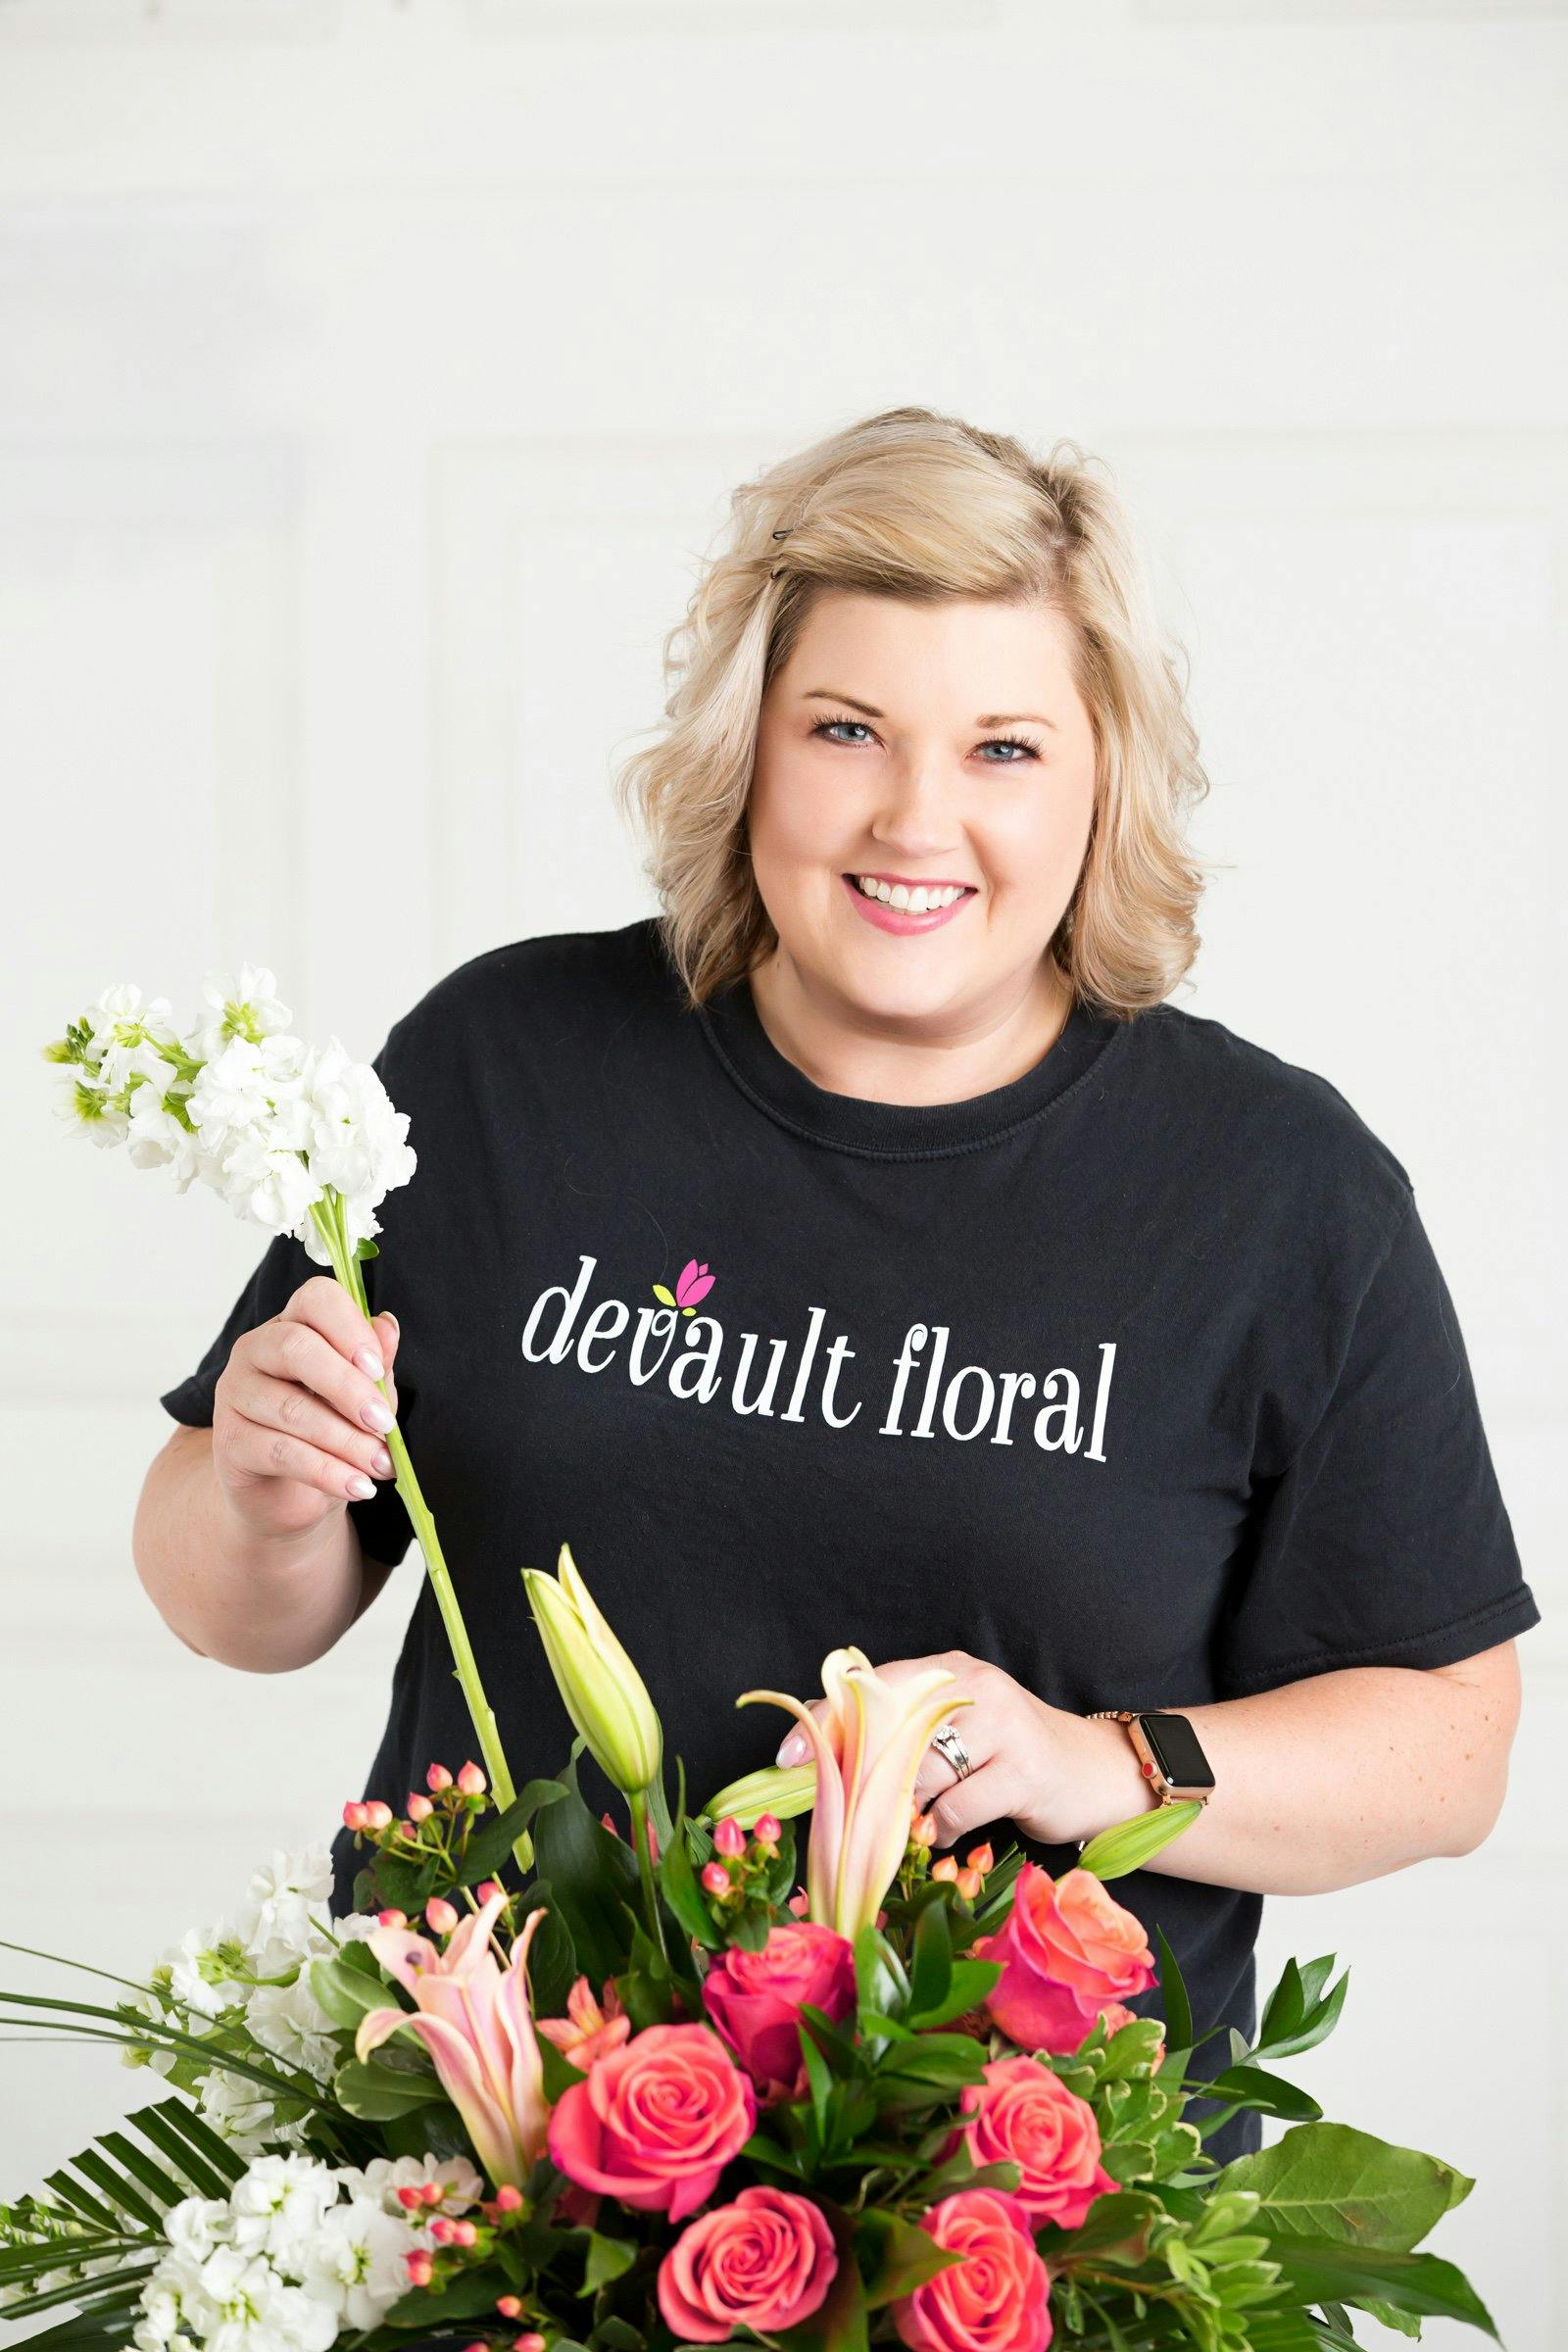 Devault Floral cover image